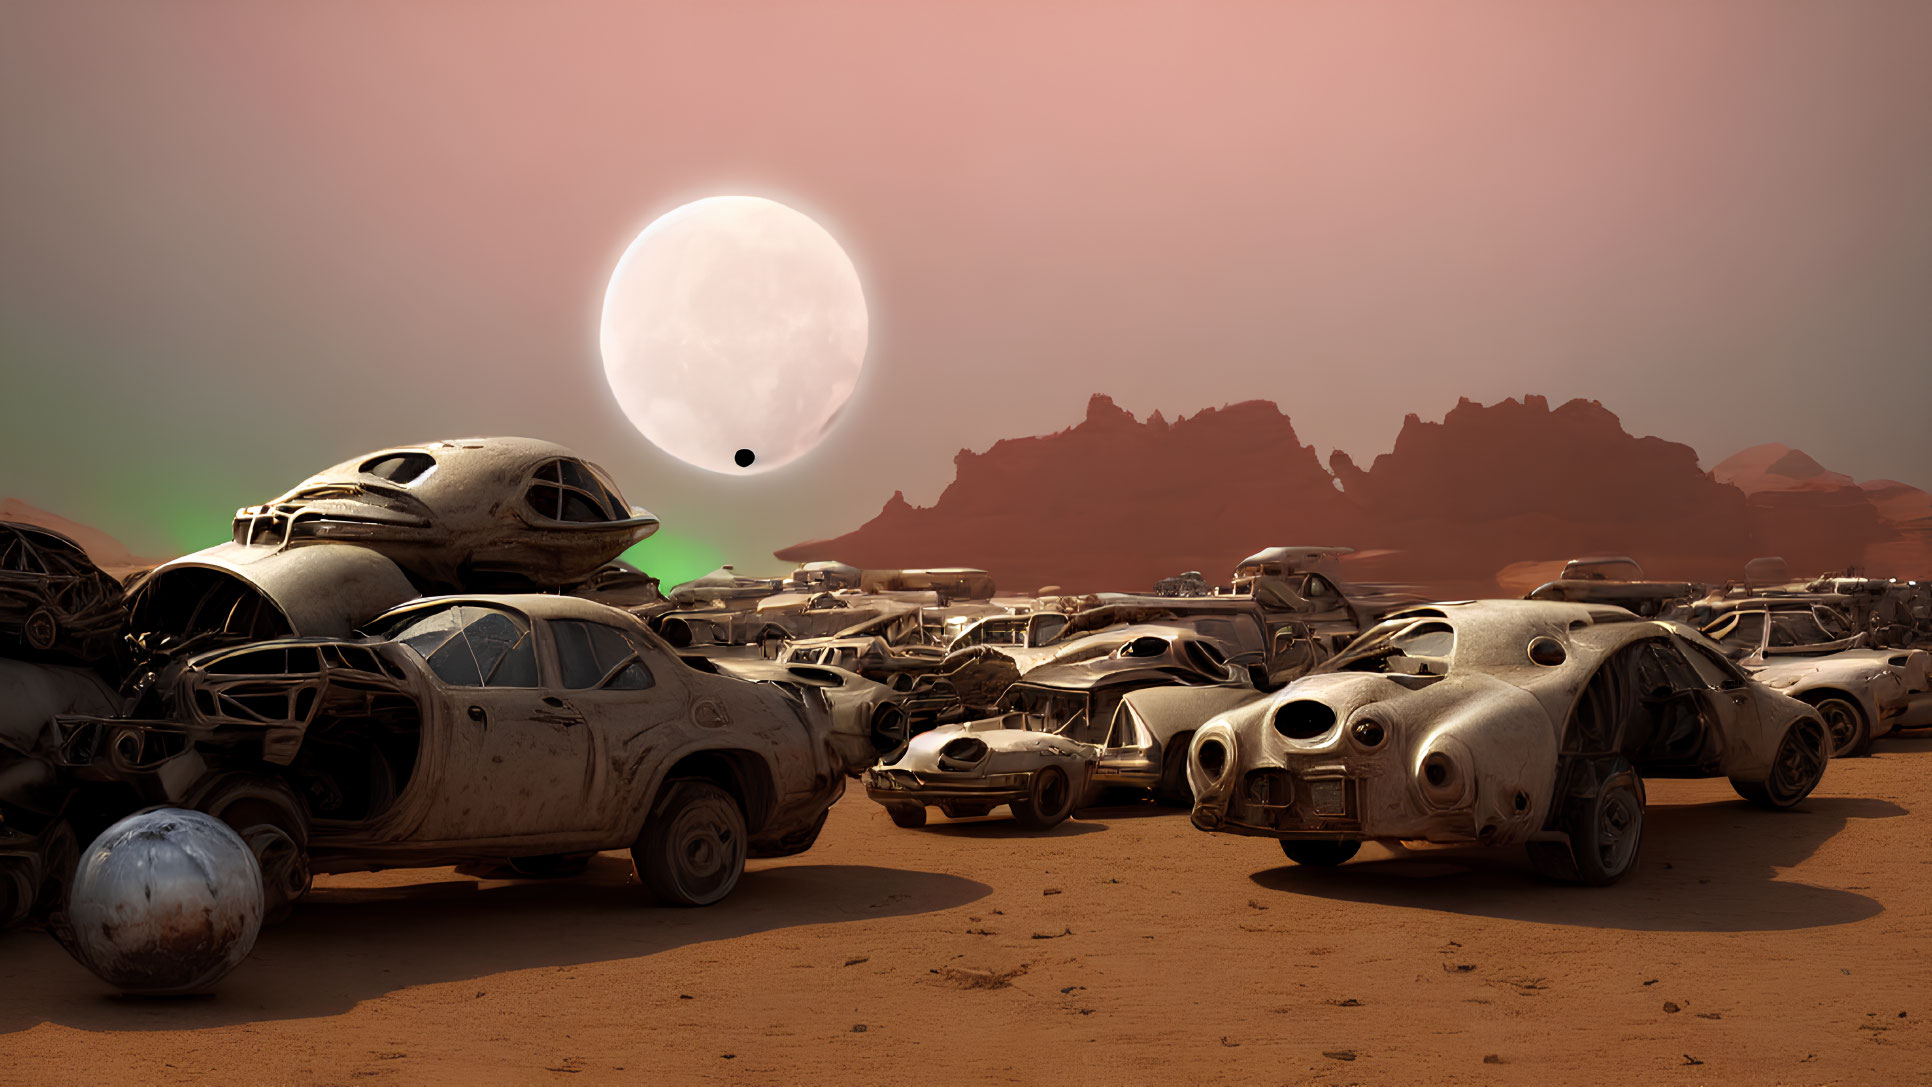 Futuristic car junkyard under hazy sky in barren desert